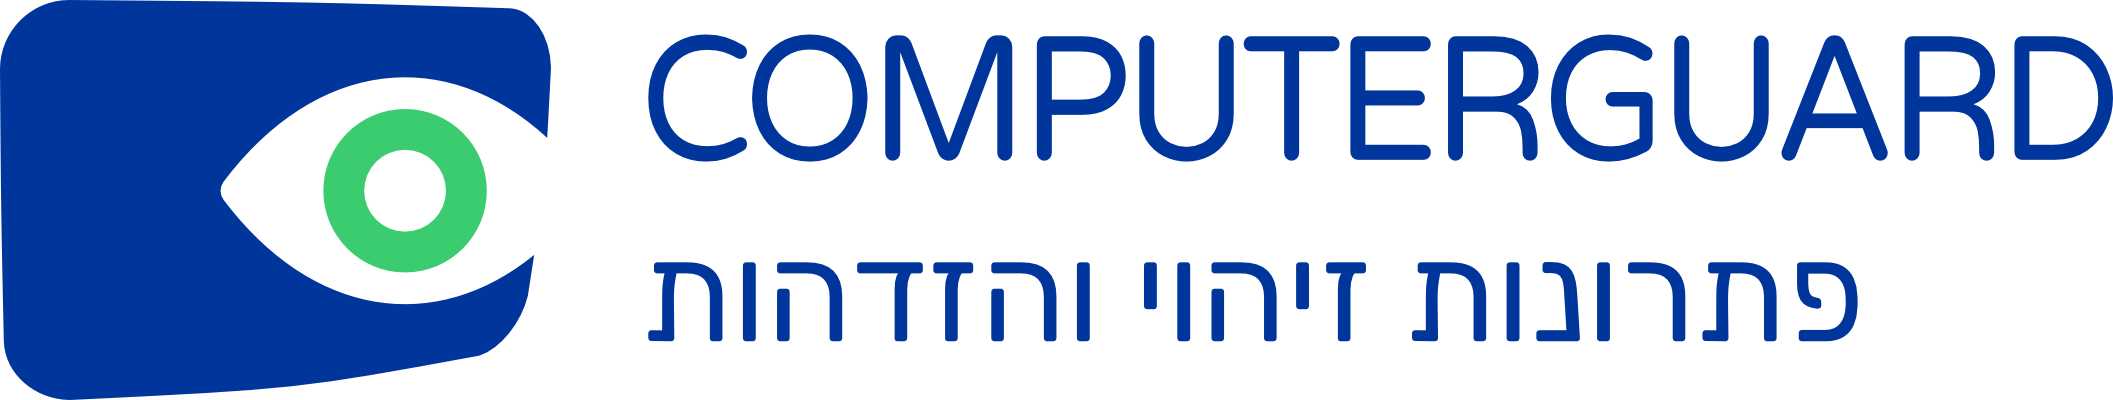 ComputerGuard